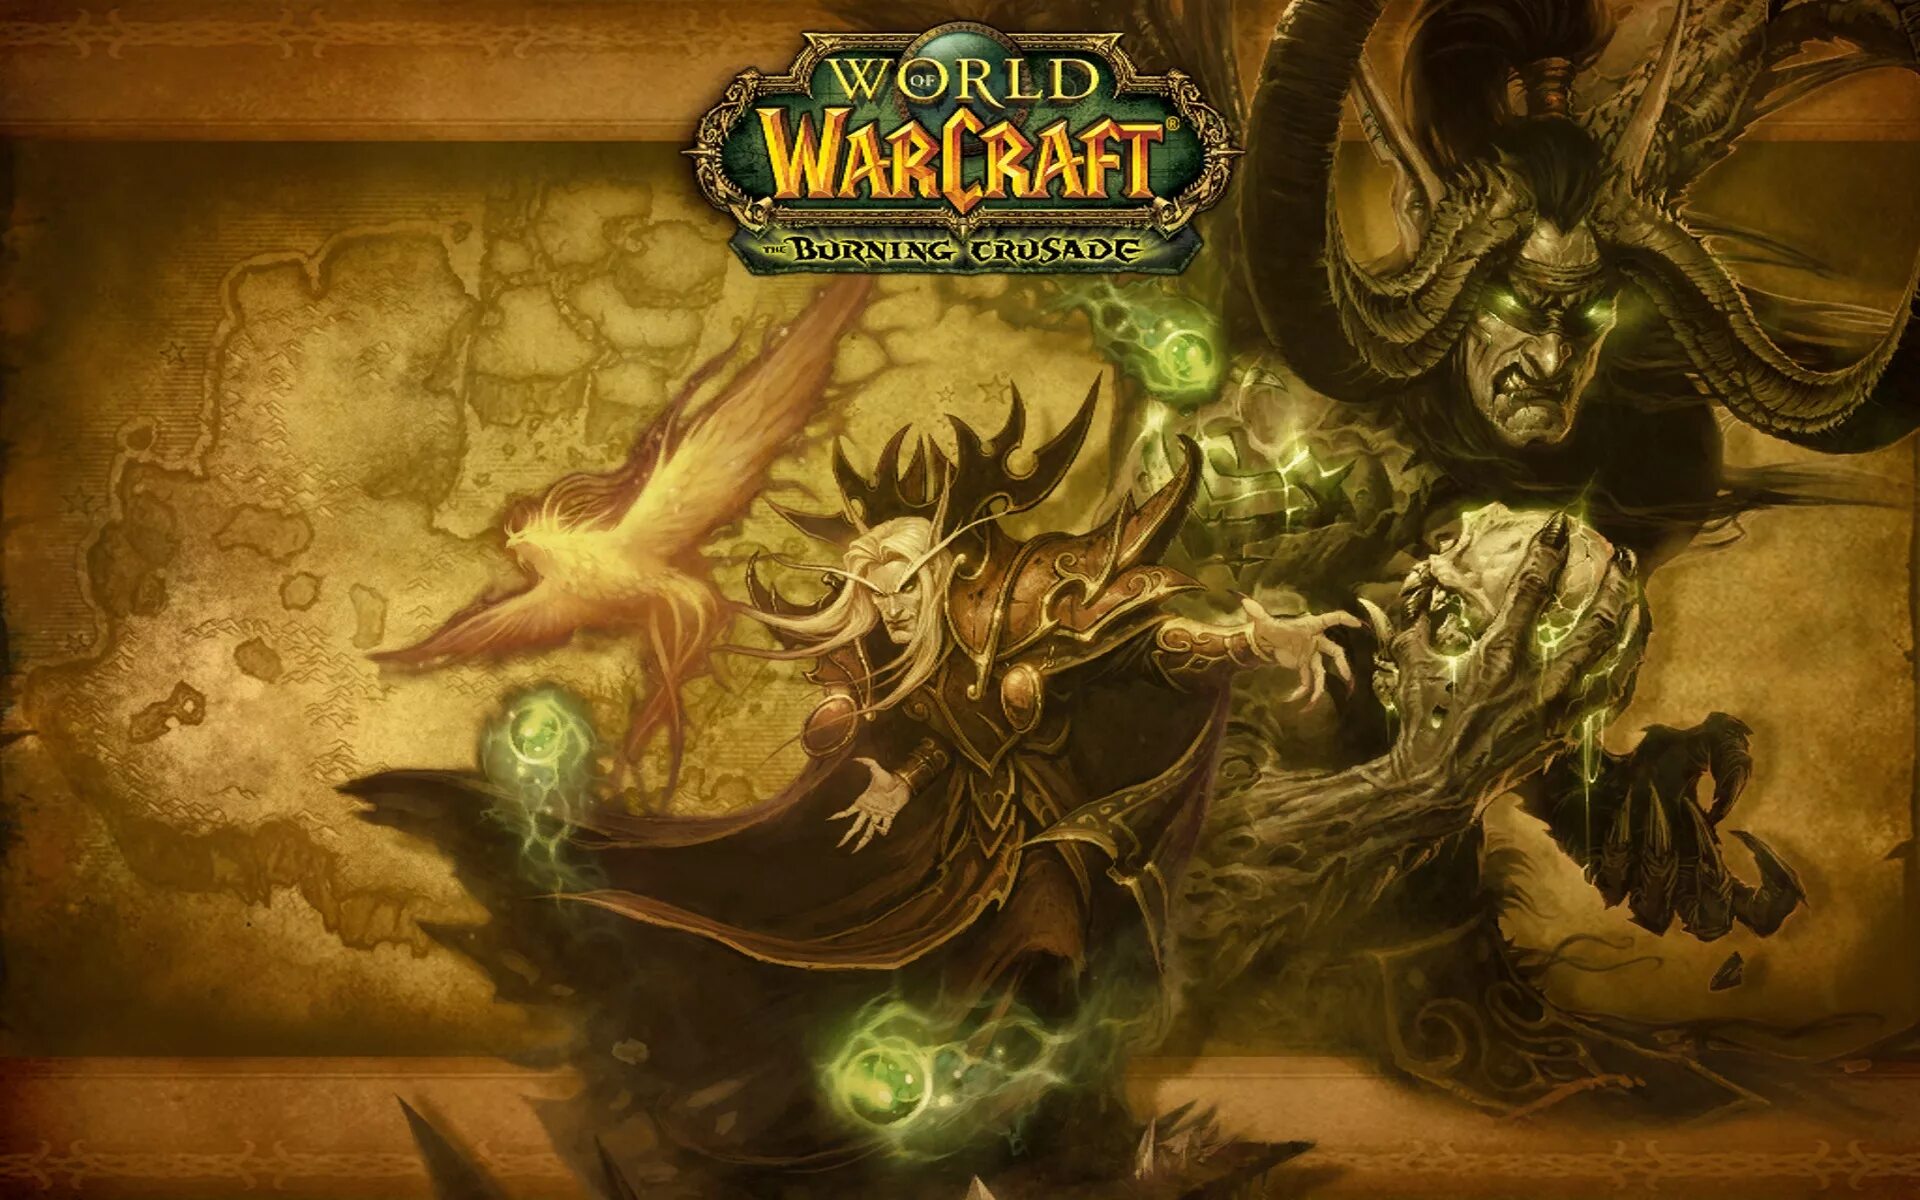 World of Warcraft загрузочные экраны. Warcraft 3 экран загрузки. Варкрафт 3 Бернинг Крусейд. World of Warcraft Burning Crusade загрузочные экраны.